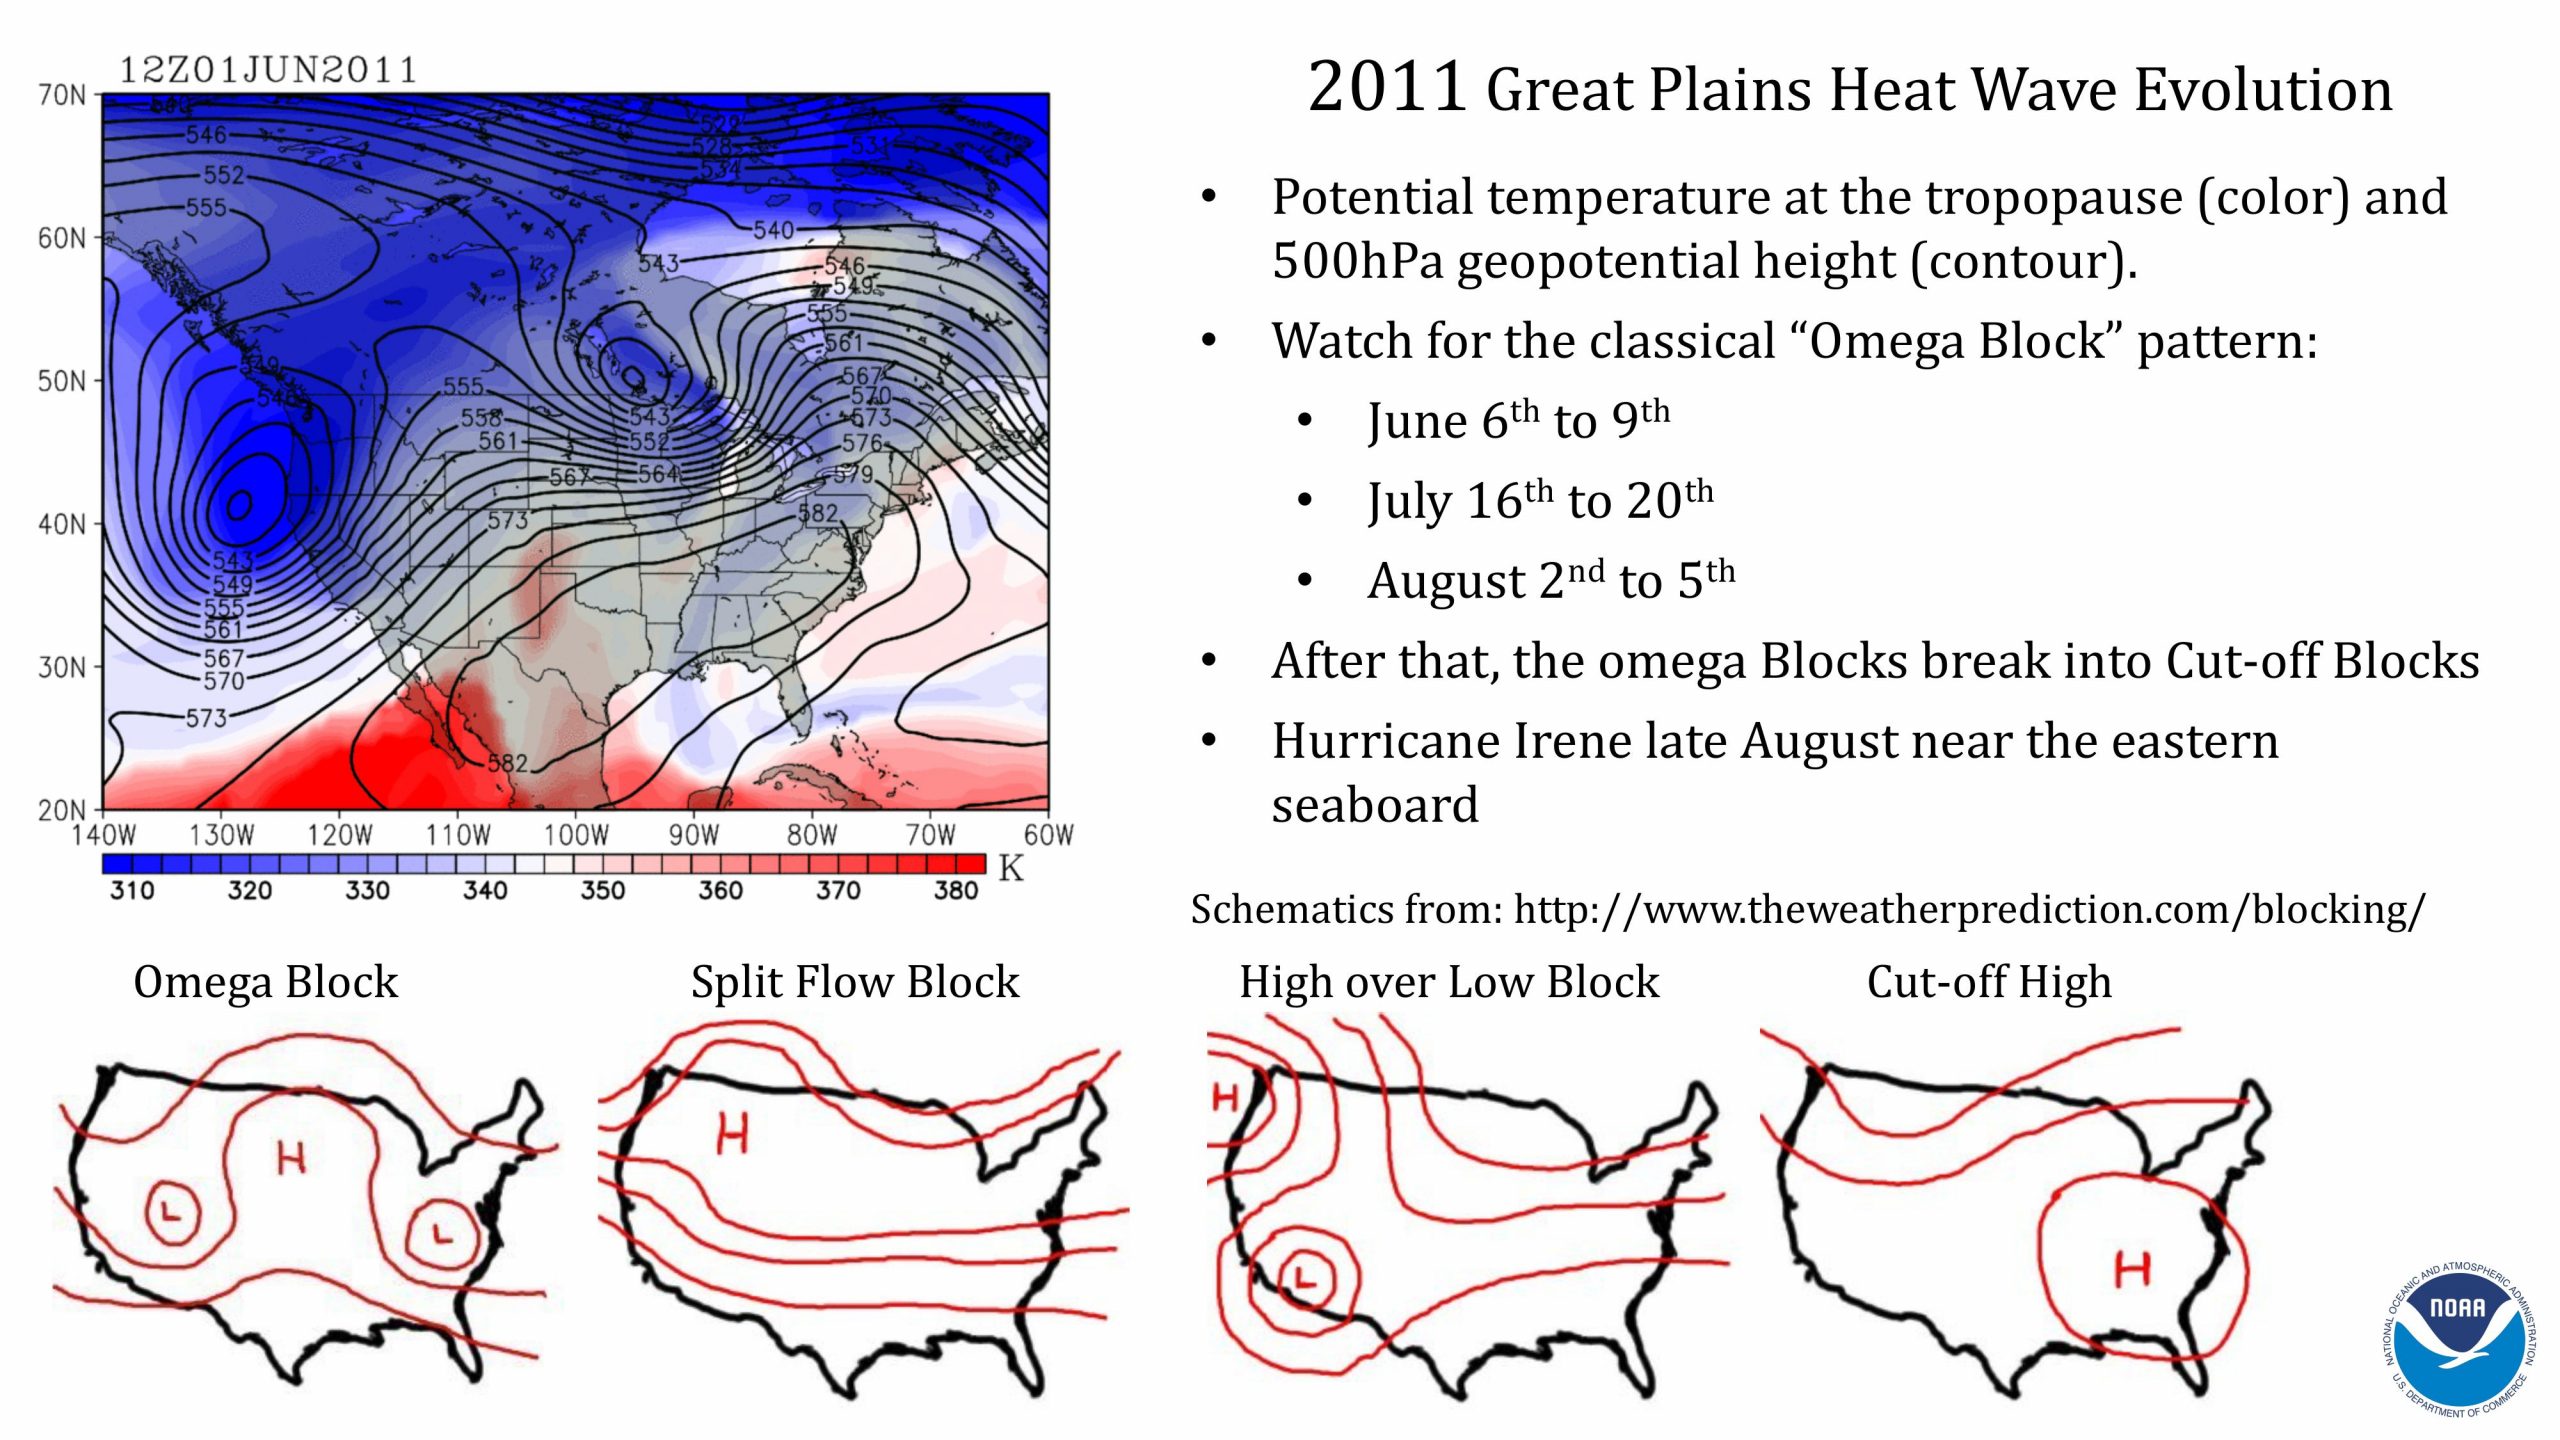 Hosmay Lopez Monsoon and Heat Waves presentation. Slide 6